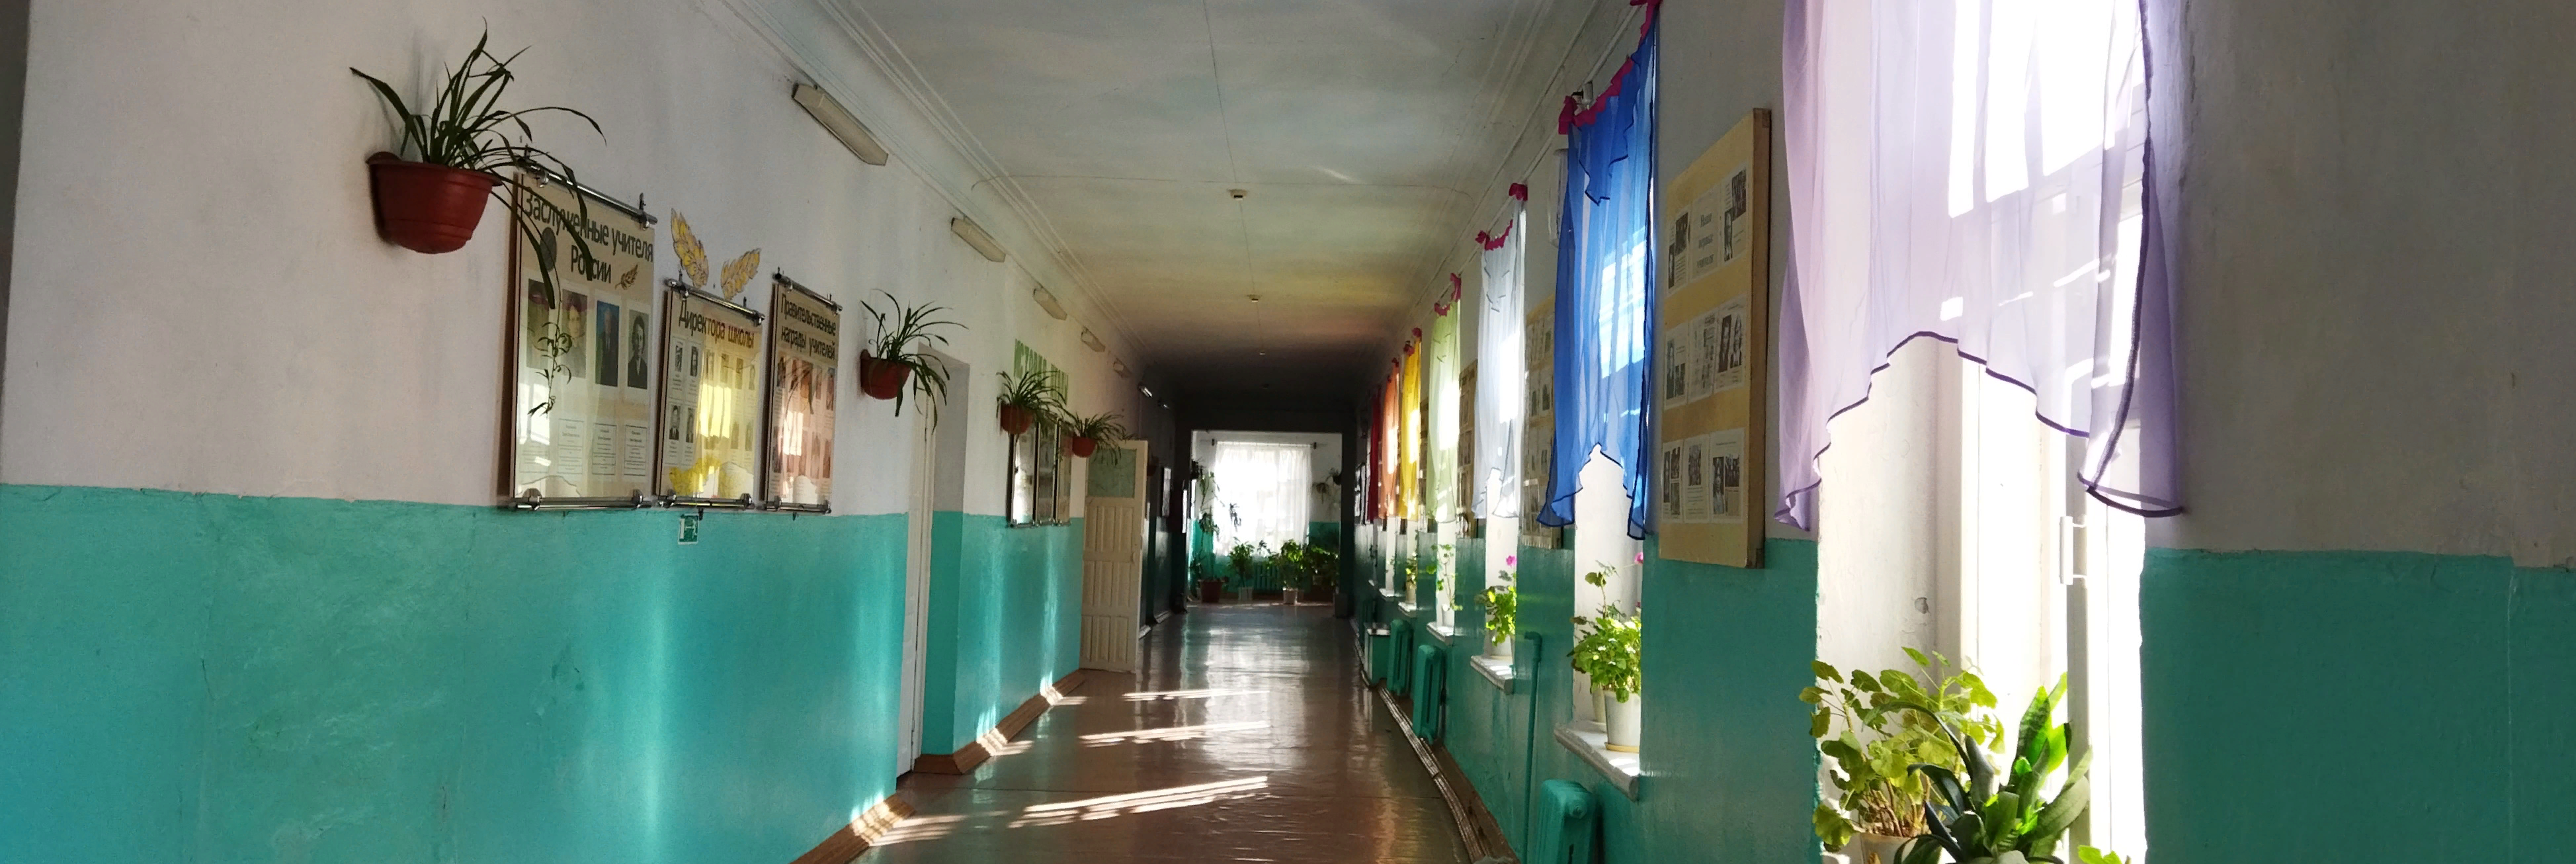 коридор школы